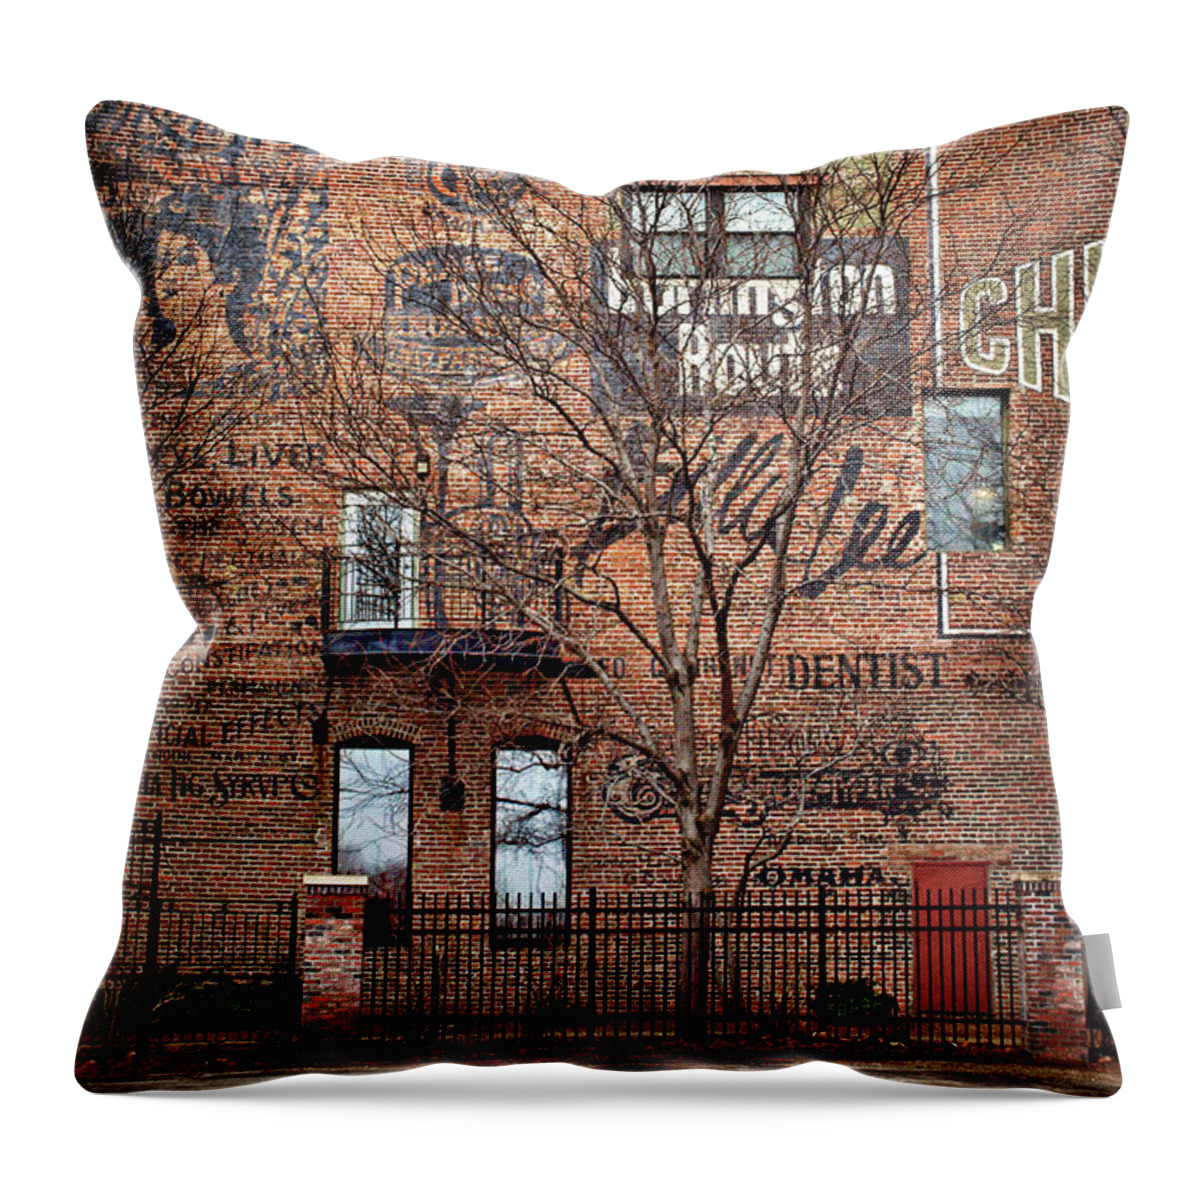 Omaha Throw Pillow featuring the photograph Old Market - Omaha - Metz Building - #1 by Nikolyn McDonald